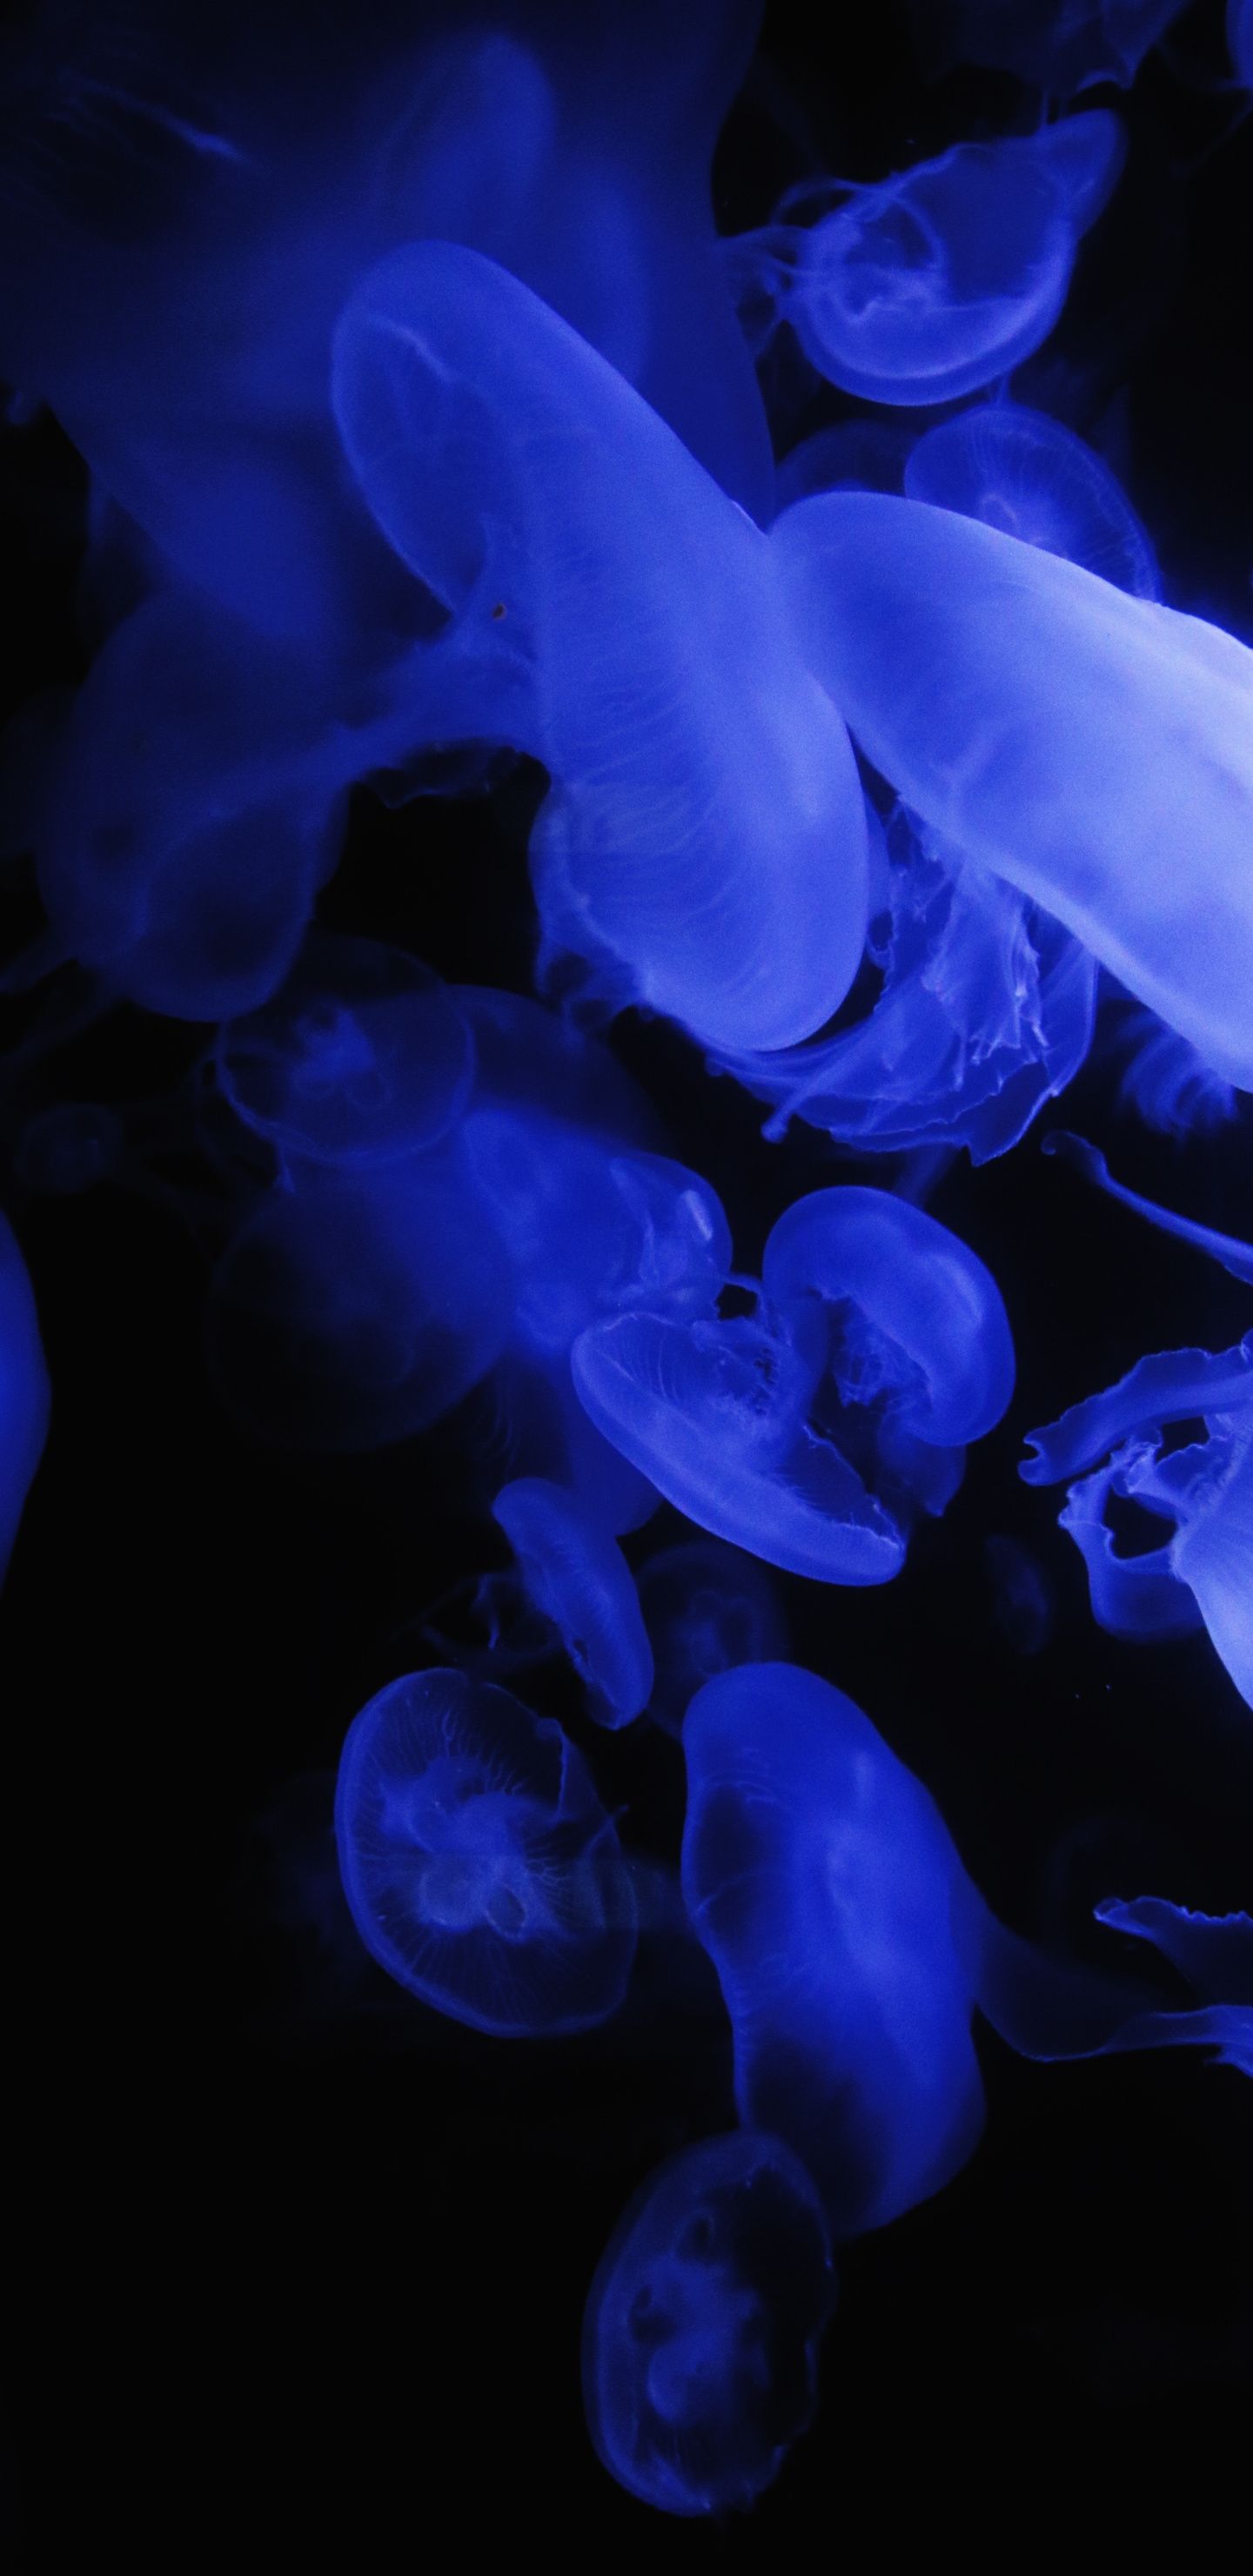 Jellyfish, blue, glow wallpaper. Animal wallpaper, Beautiful wallpaper image, Wallpaper image hd